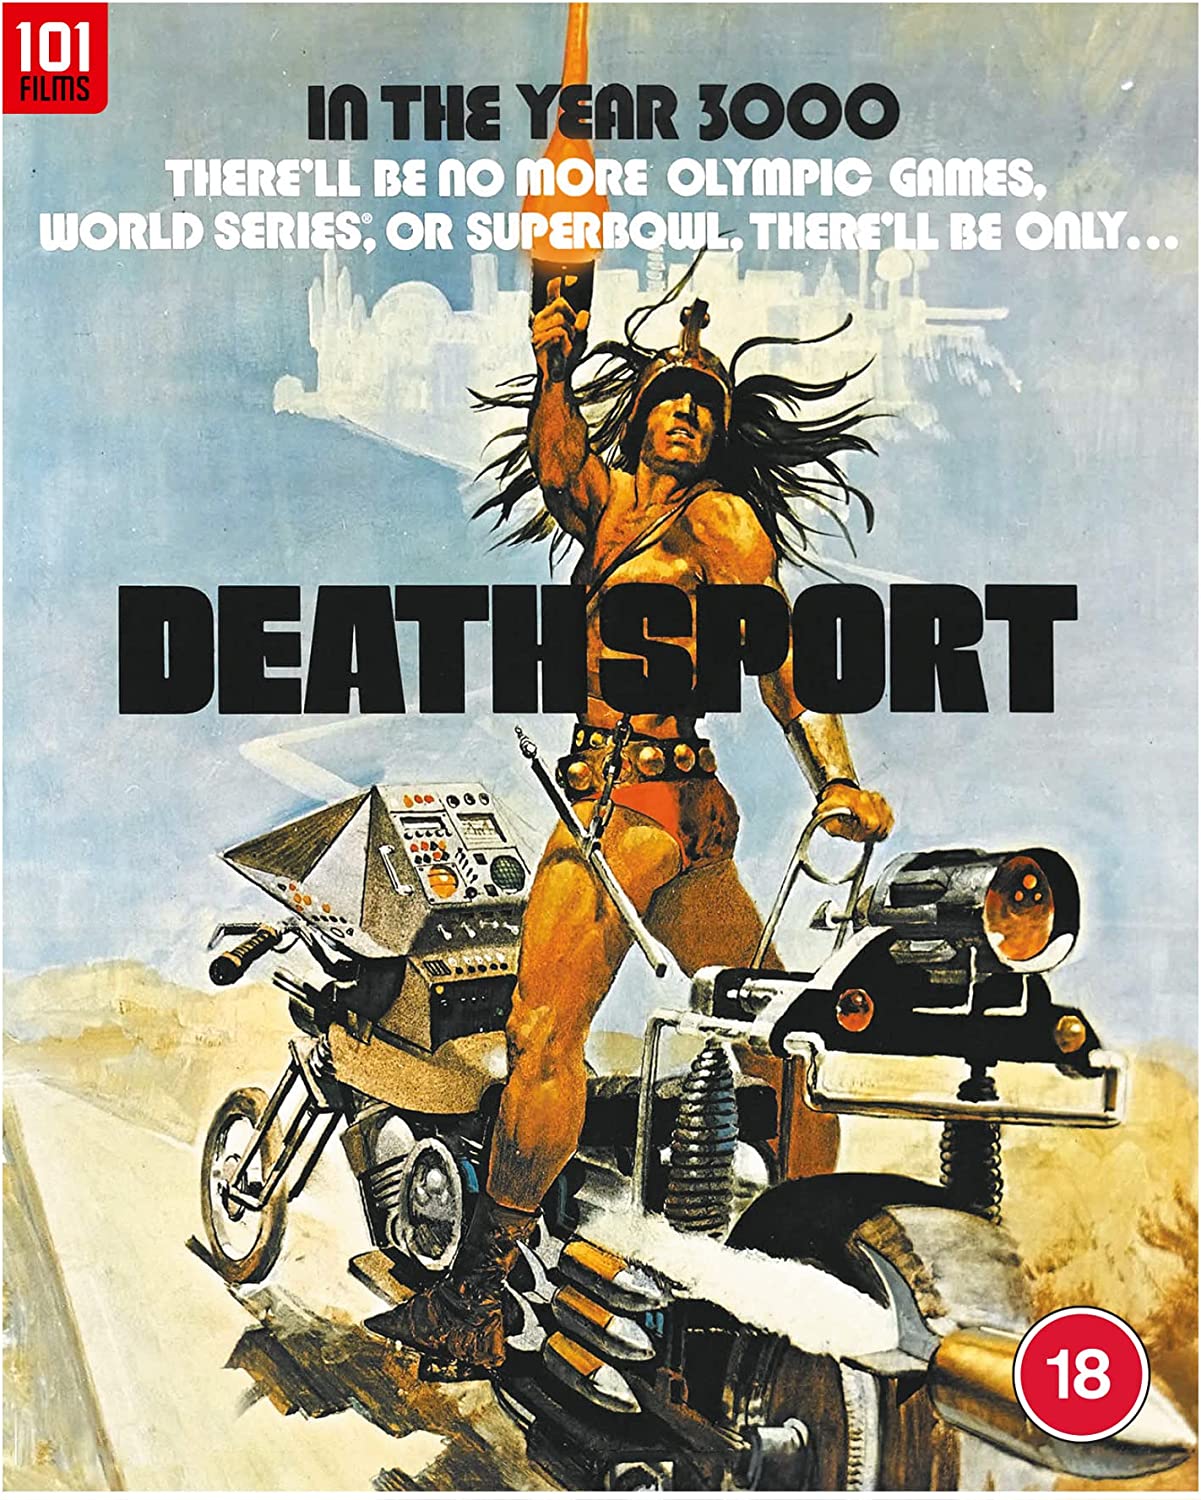 Deathsport 101 Films Blu-Ray [NEW]